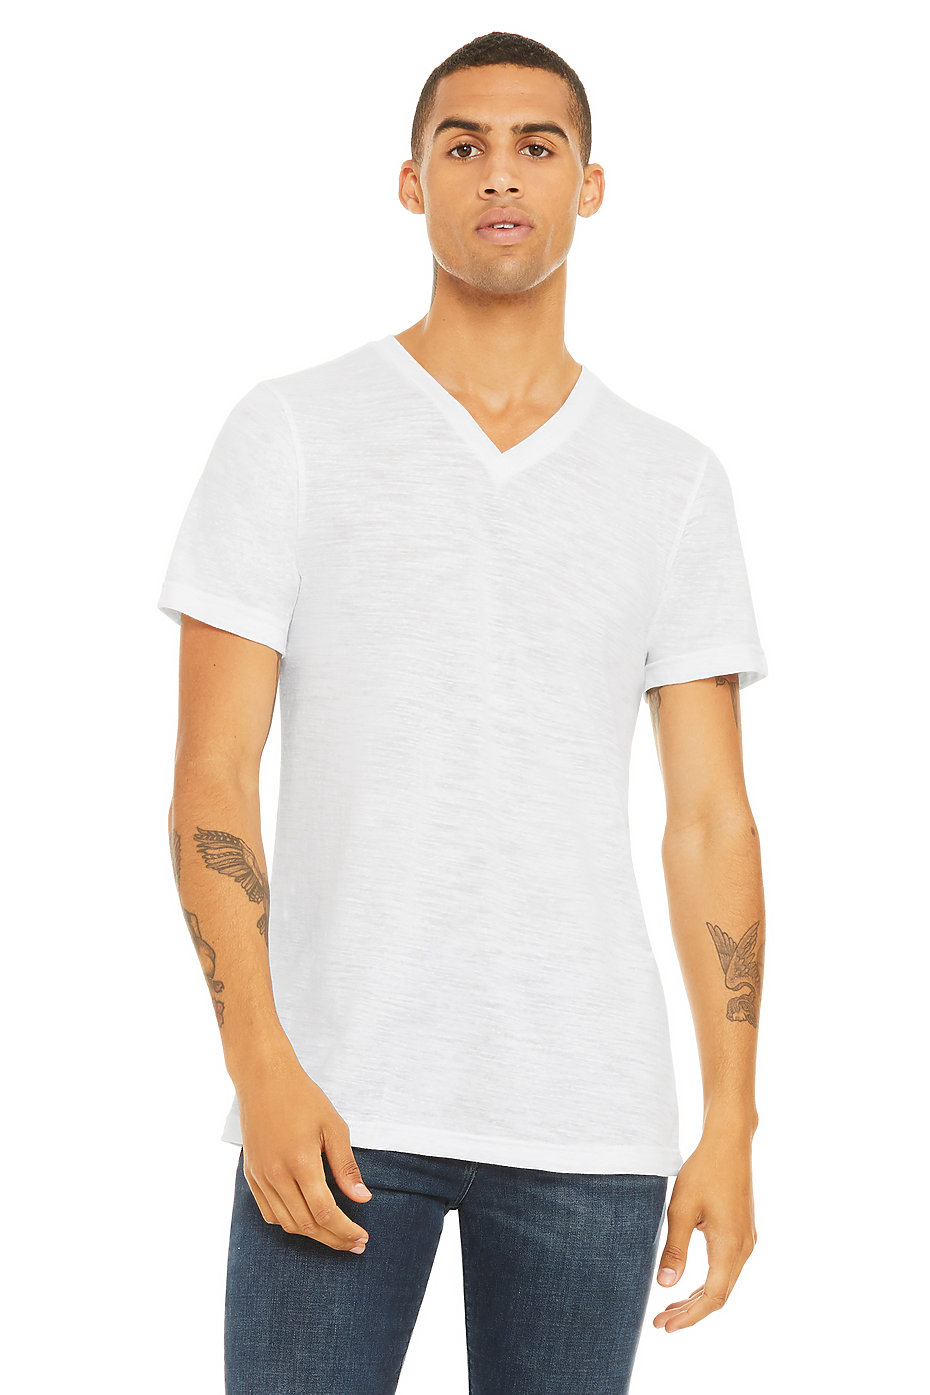 Bella + Canvas 3005 Unisex Jersey Short-Sleeve V-Neck T-Shirt S White